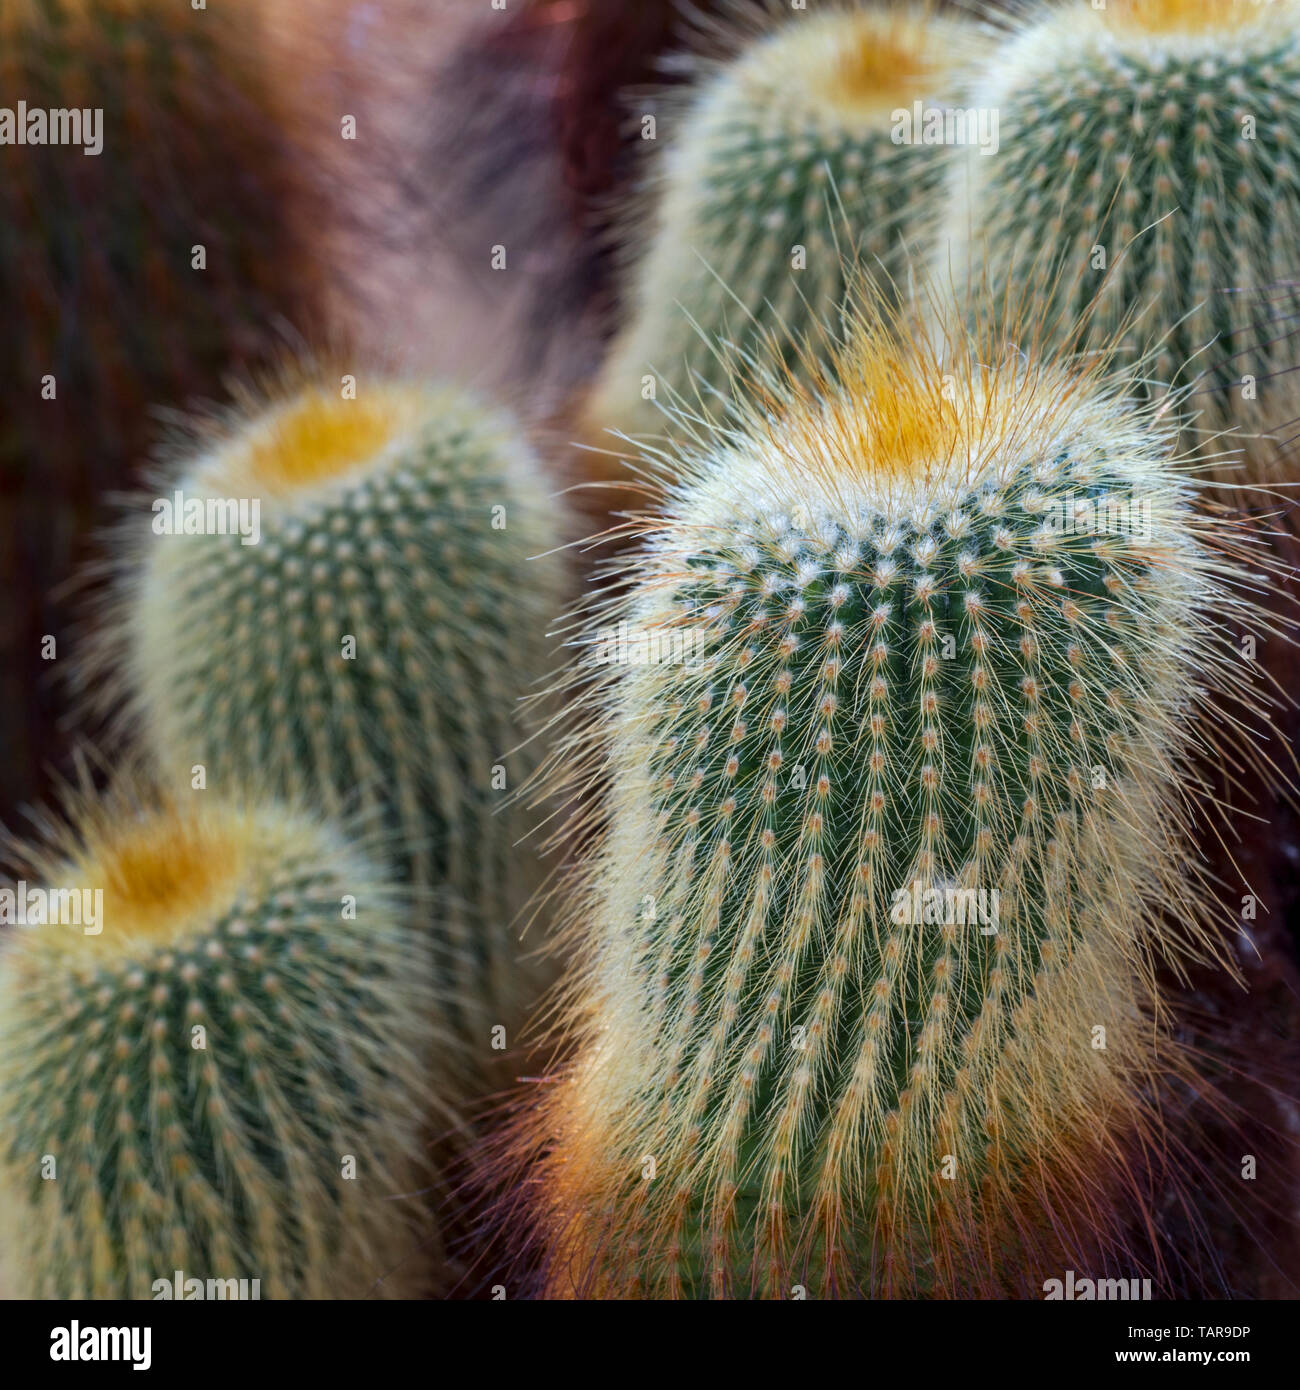 Lemon ball cactus / golden ball cactus / yellow tower cactus (Parodia leninghausii) native to South America Stock Photo